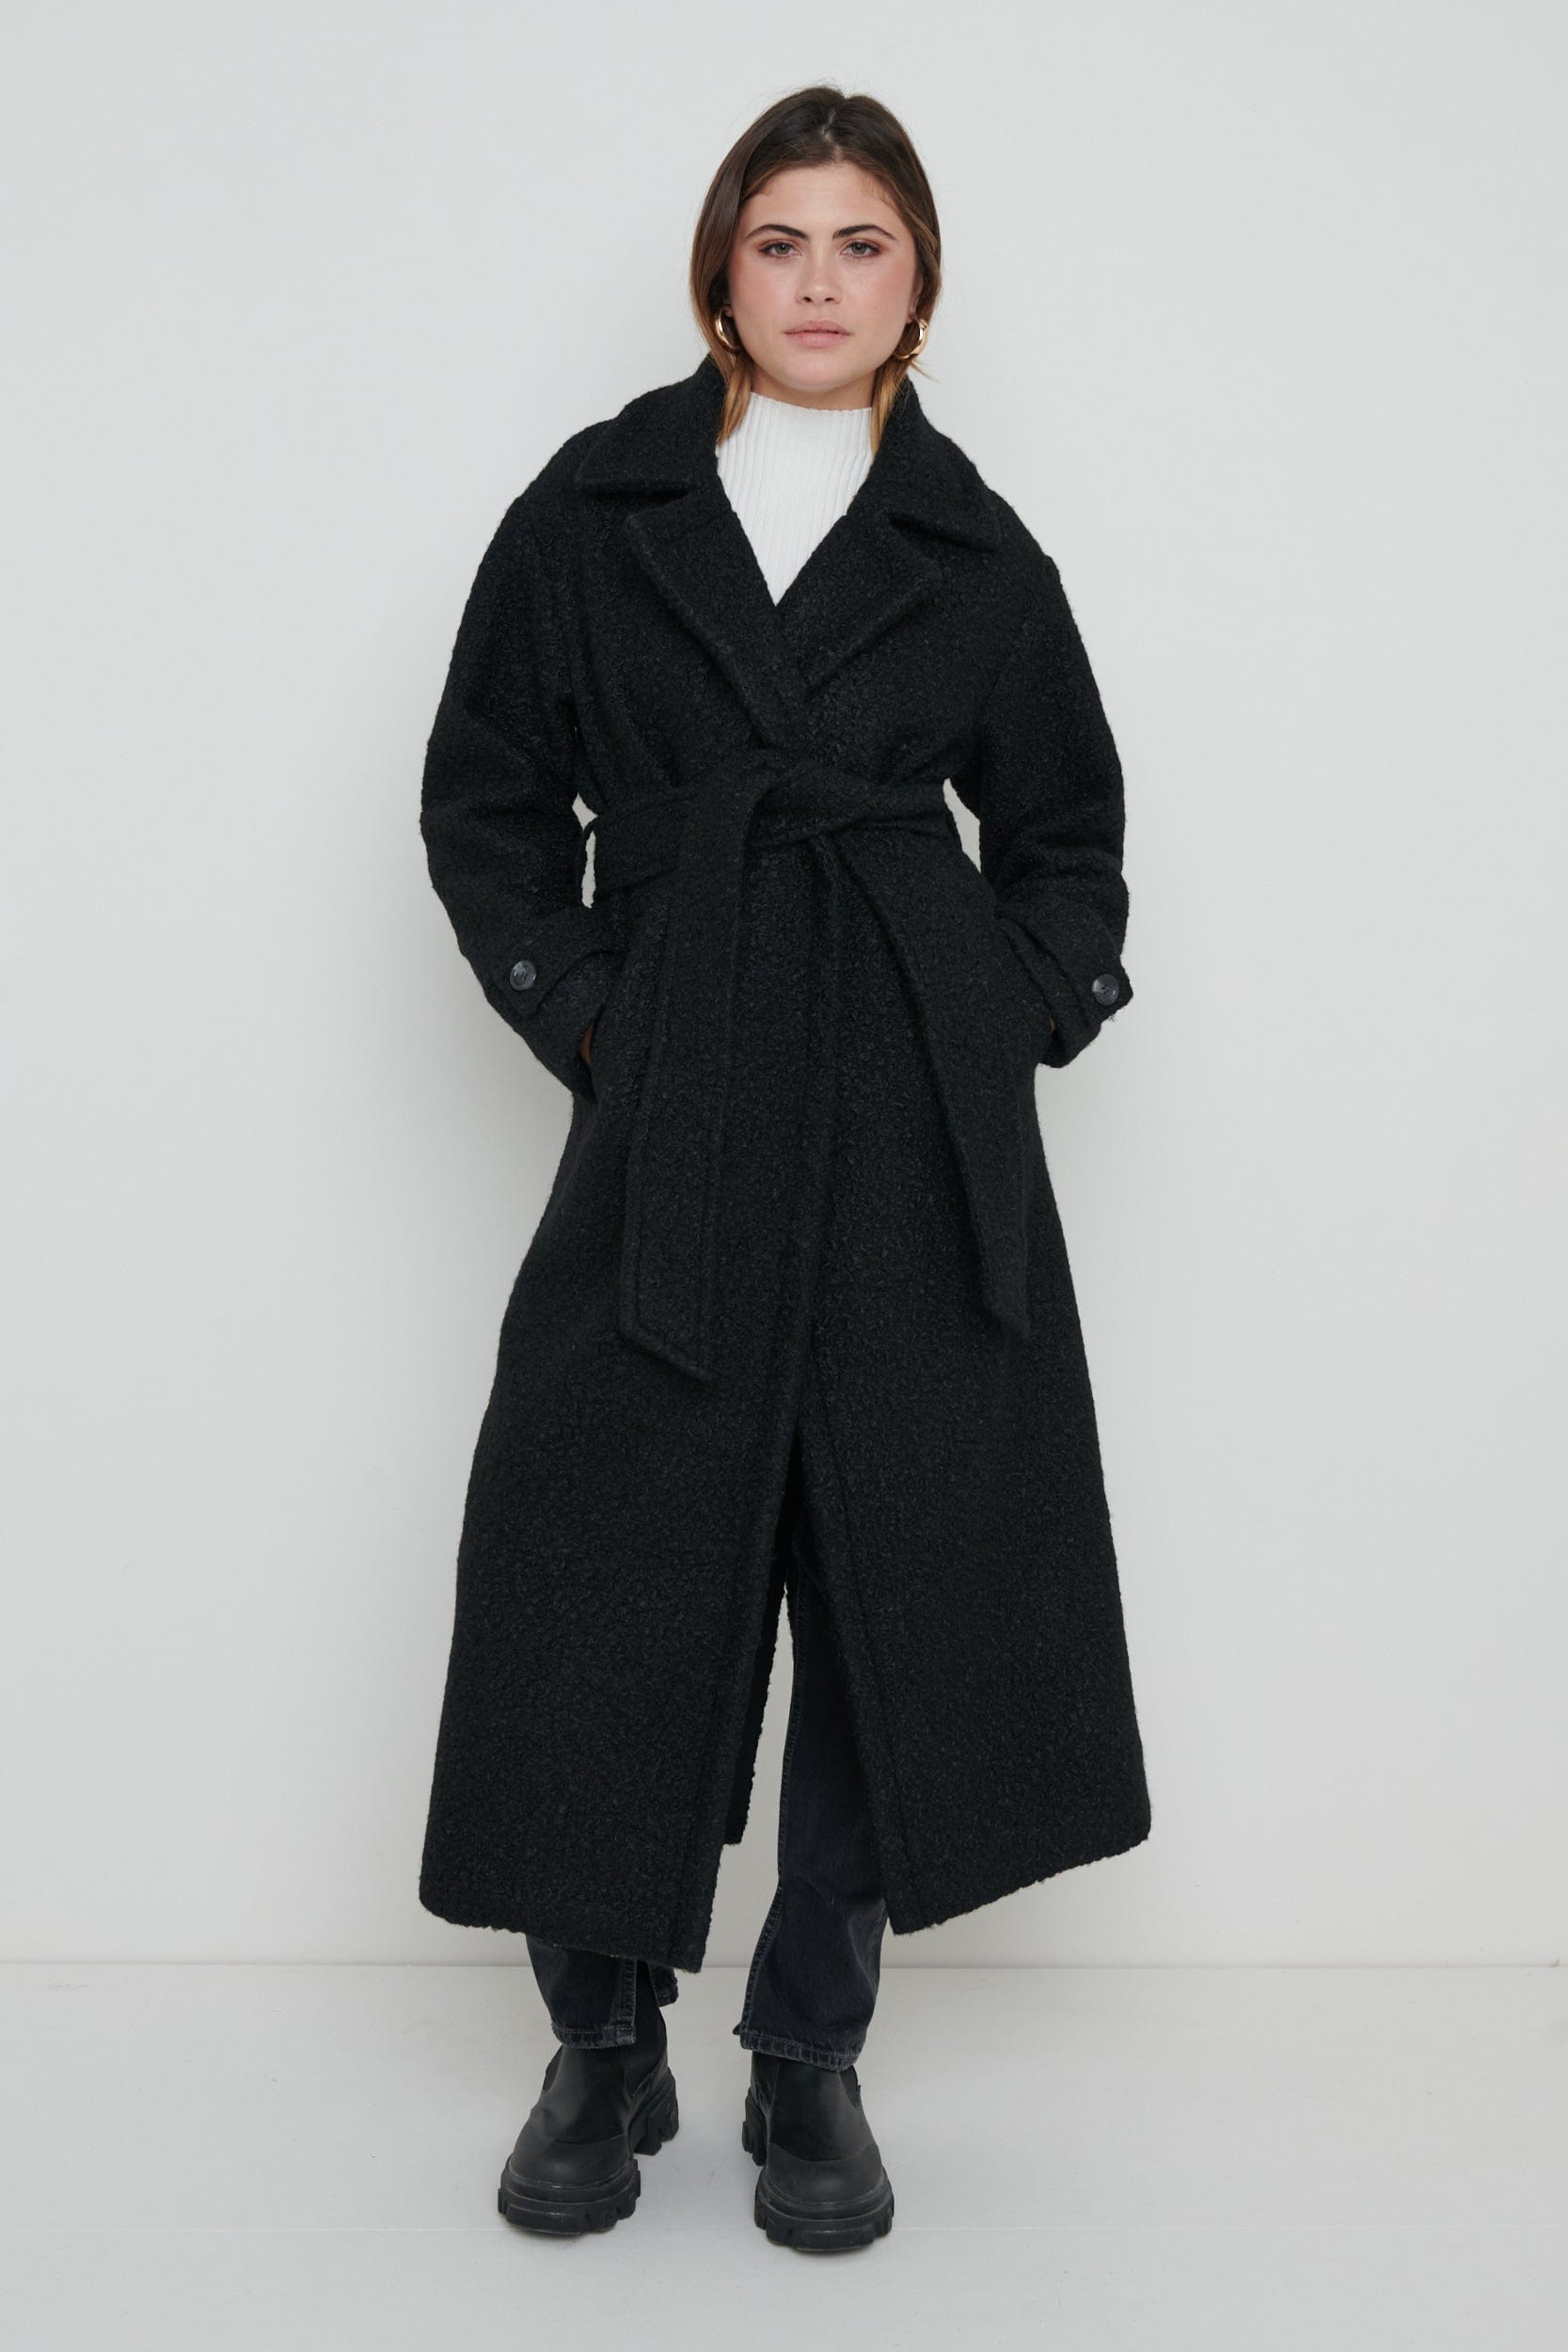 Grayson Boucle Oversized Coat - Black, XS